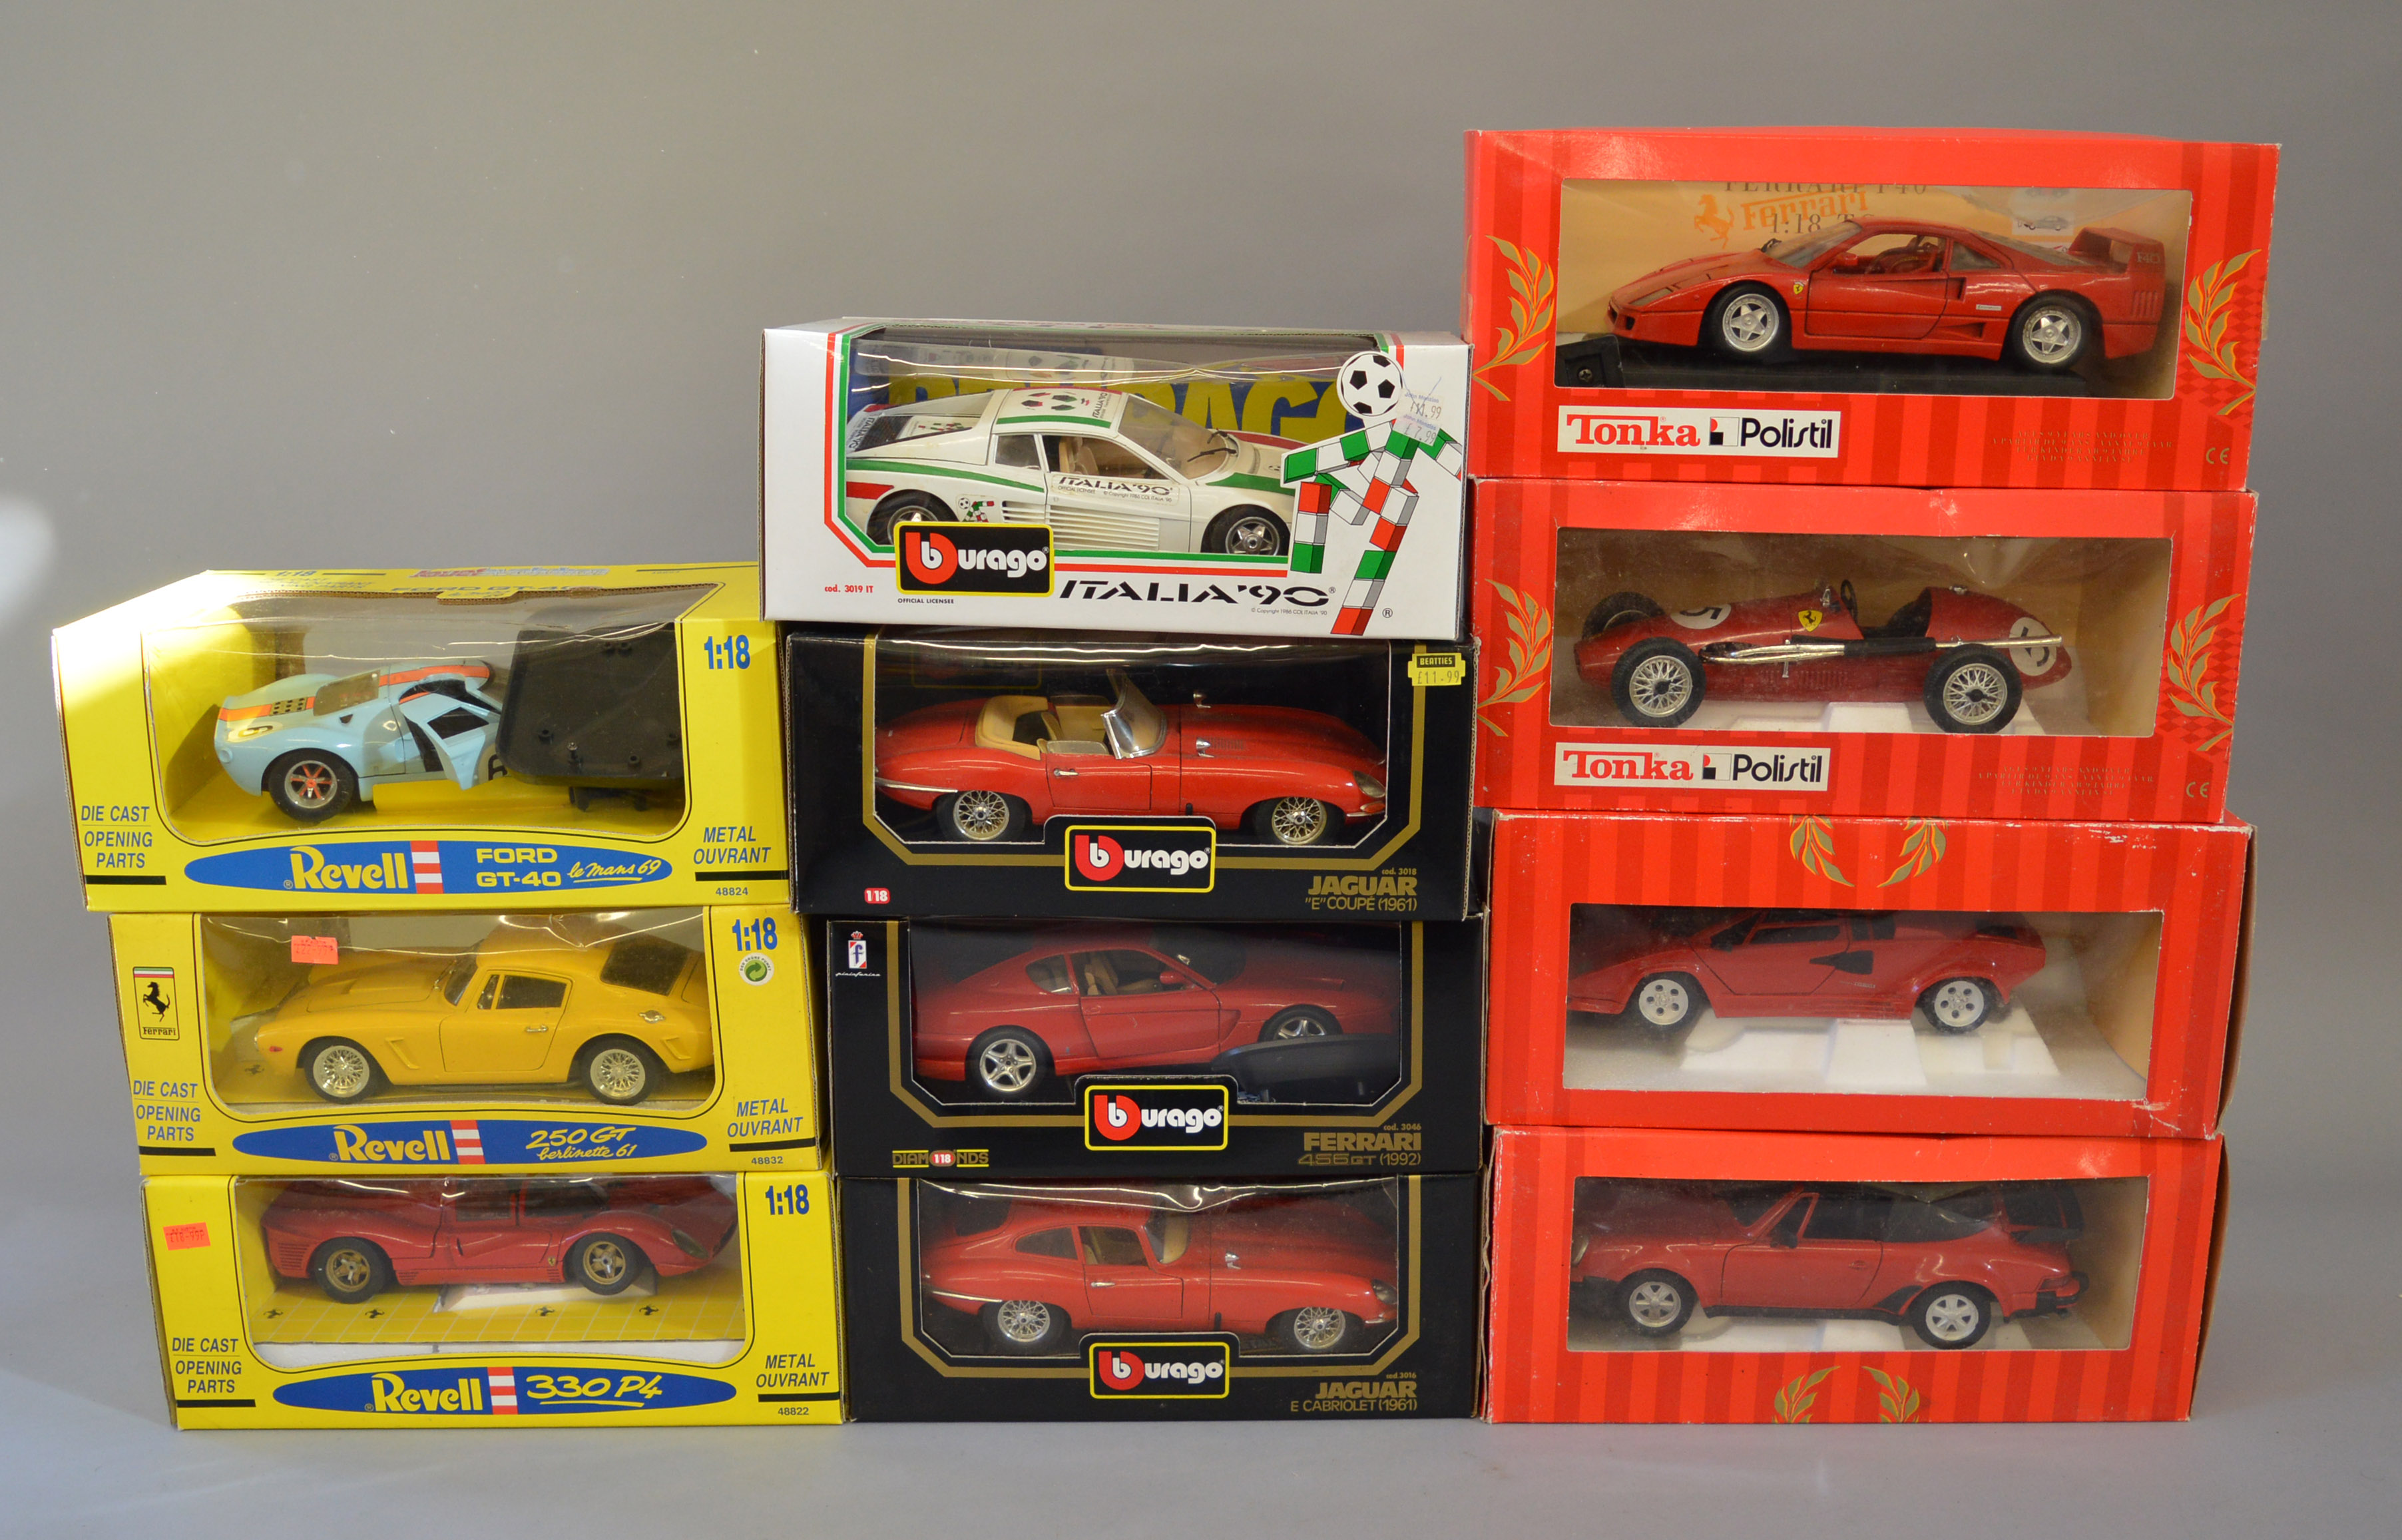 11 x 1:18 scale diecast model cars by Bburago, Polistil and Jouef, includes Ferrari.